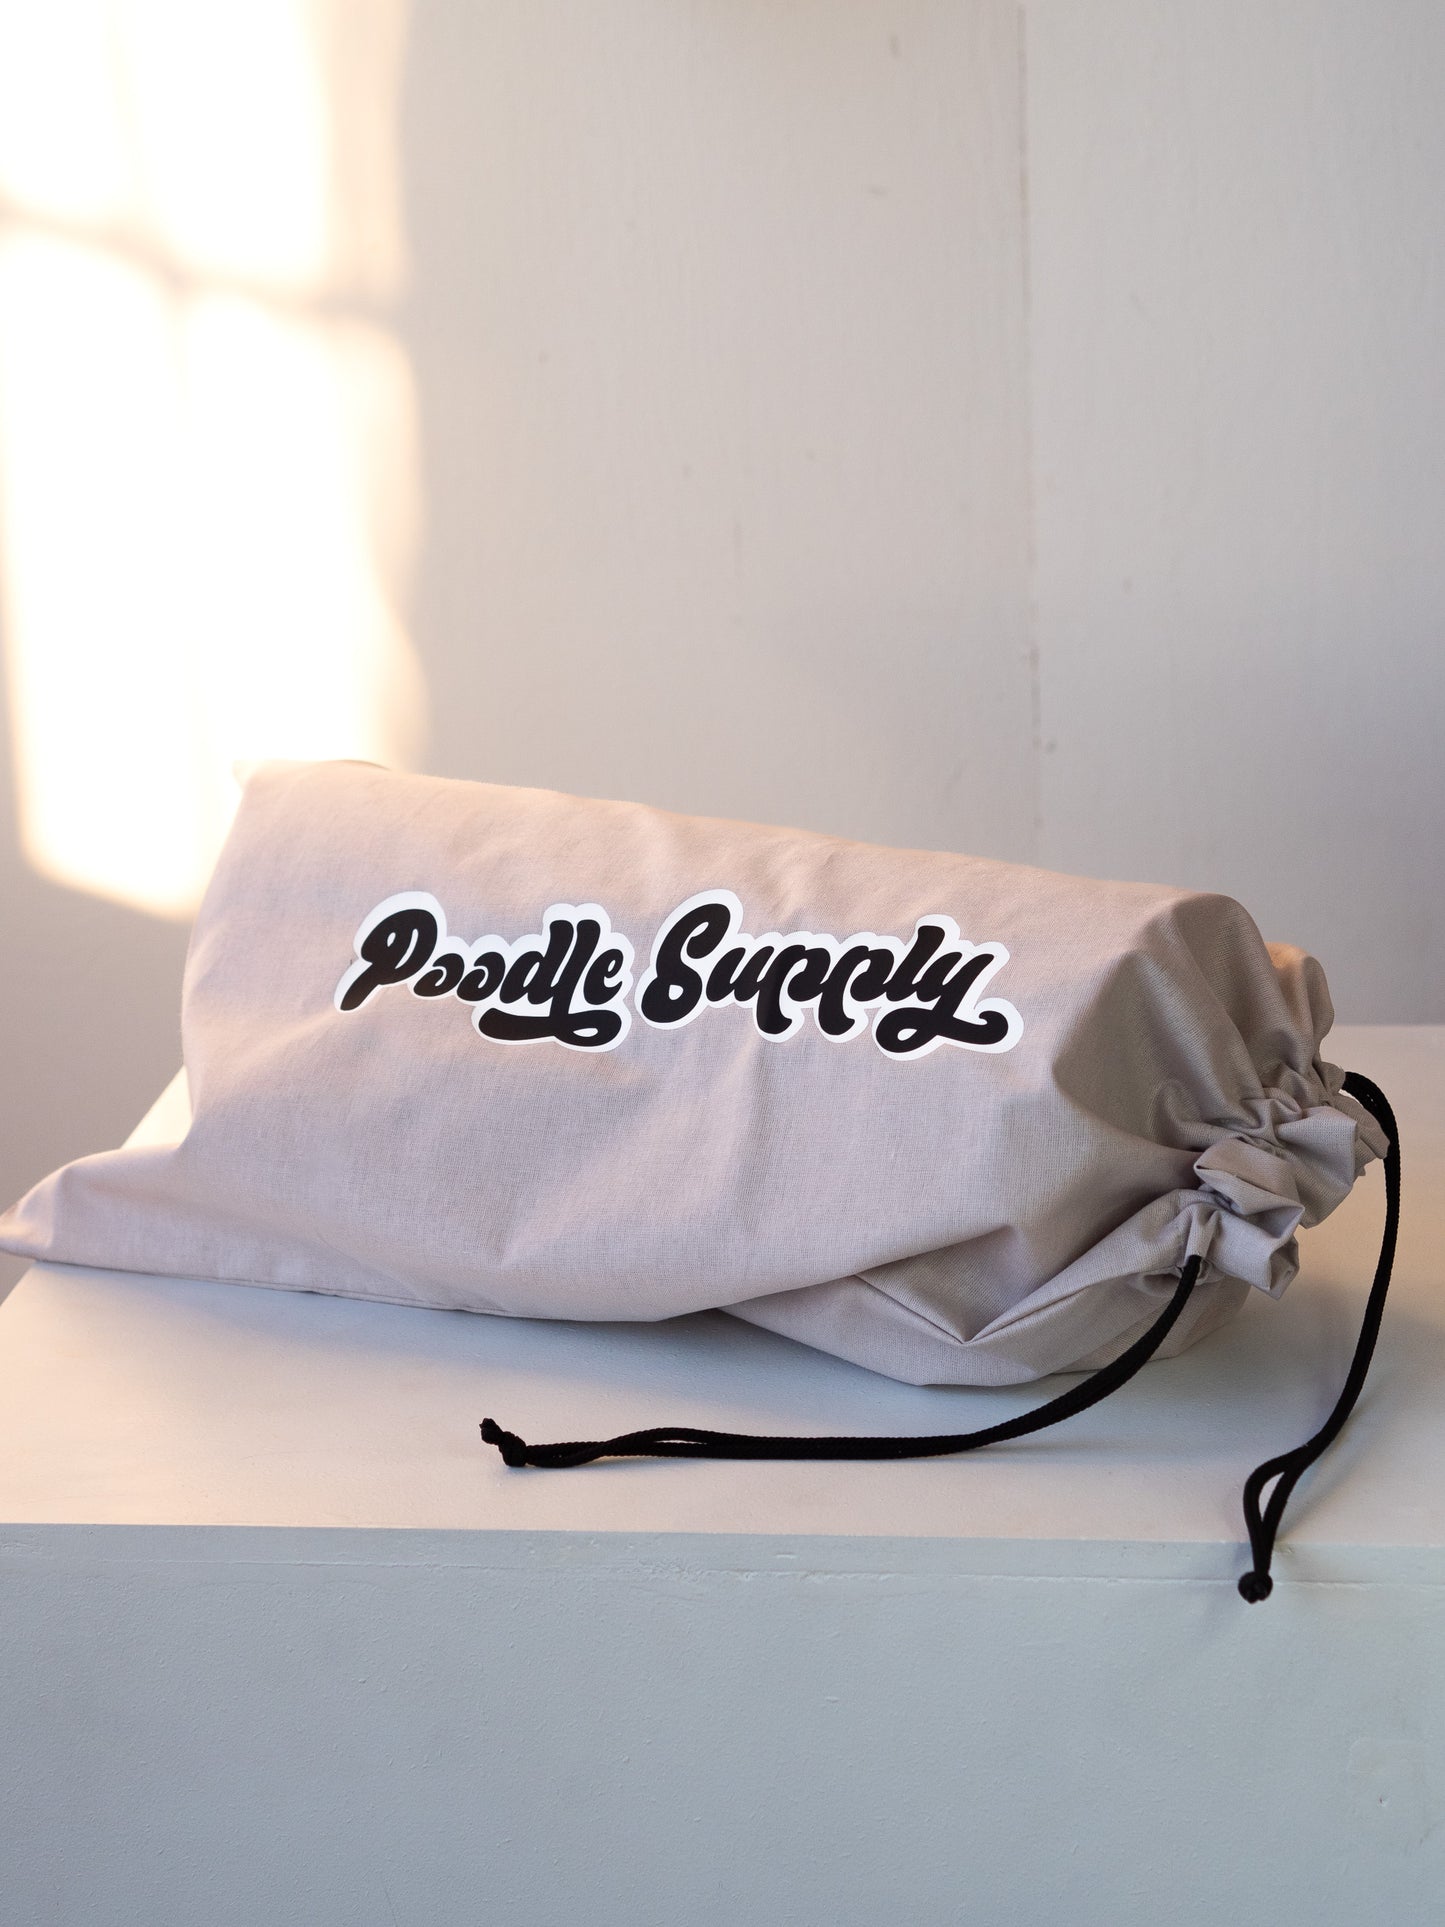 Poodle Supply Top Knot Pillow - Princess Bubblegum - Medium